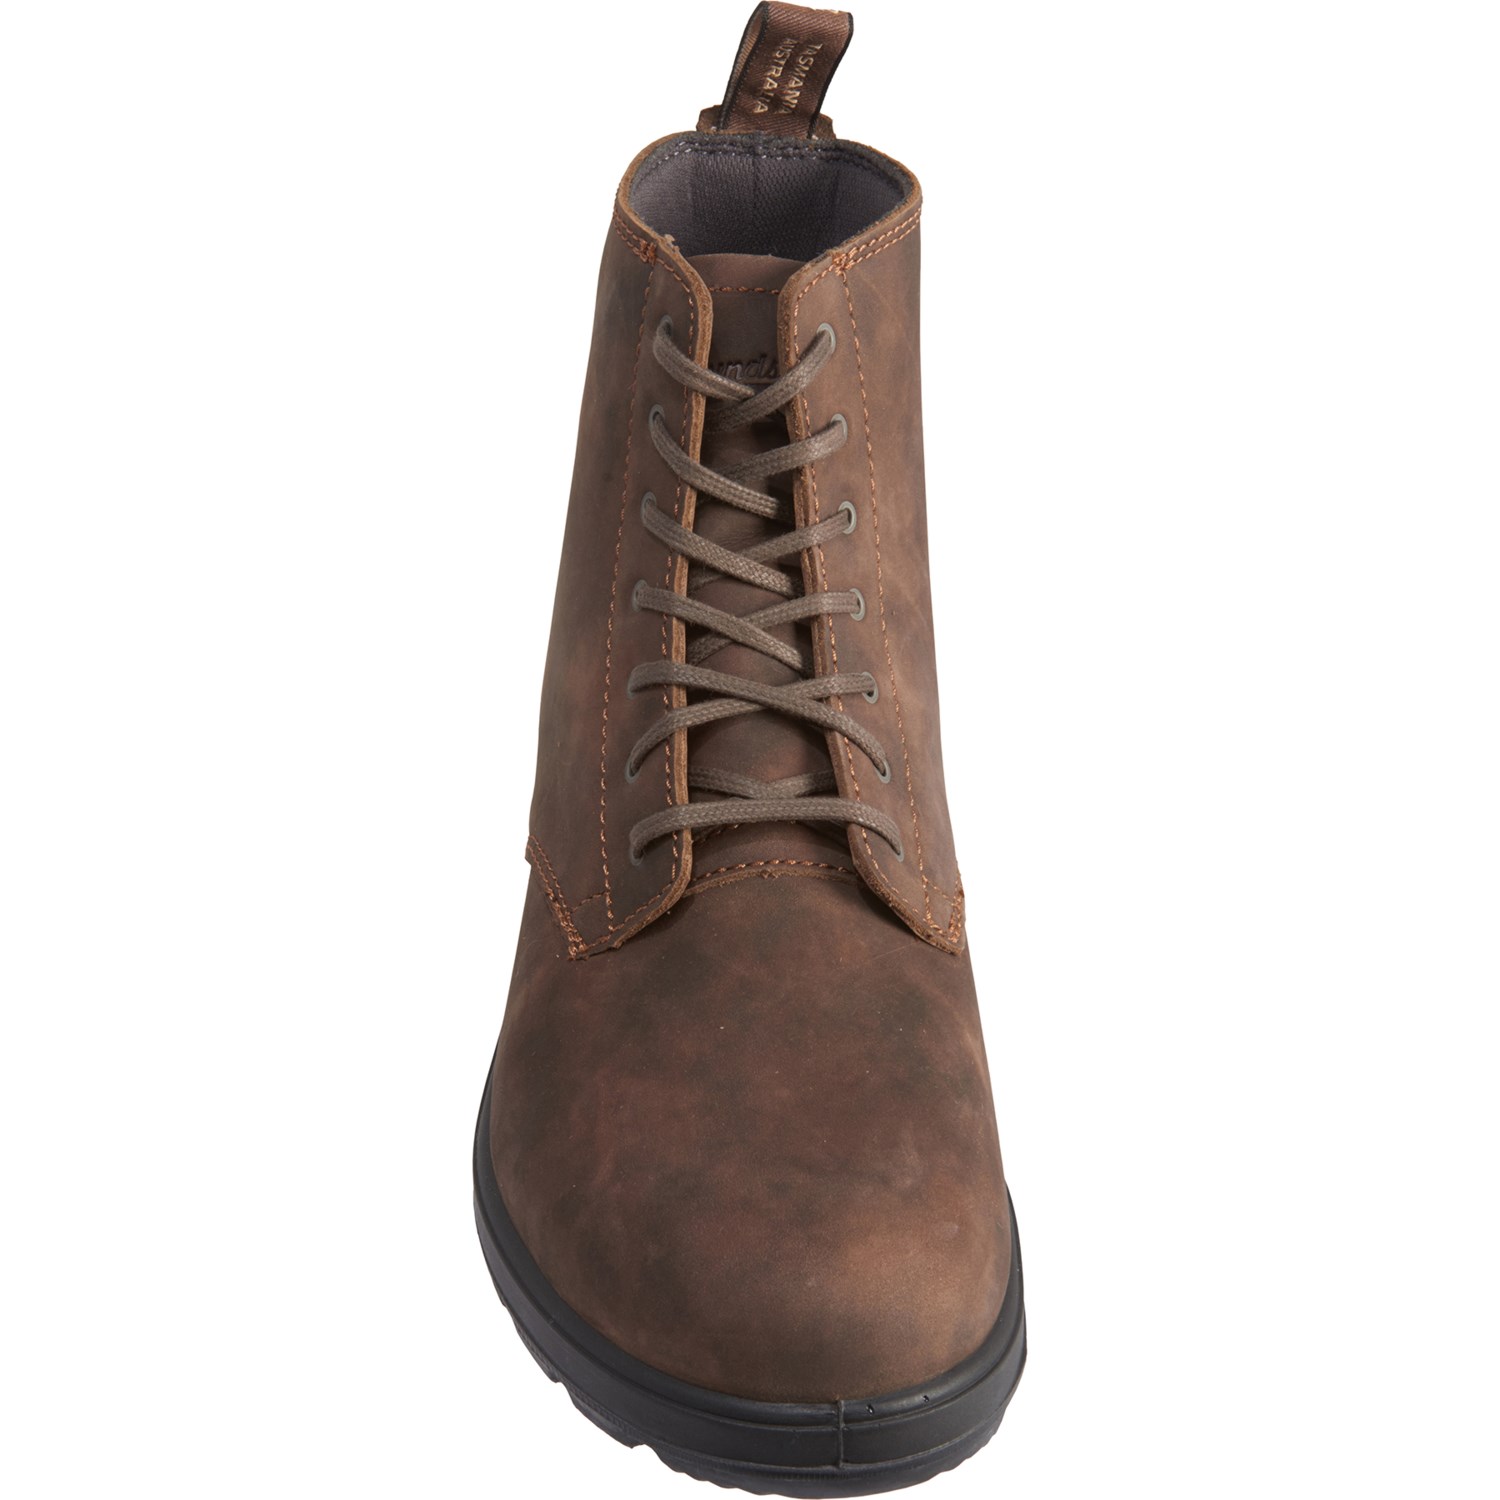 blundstone boots sierra trading post